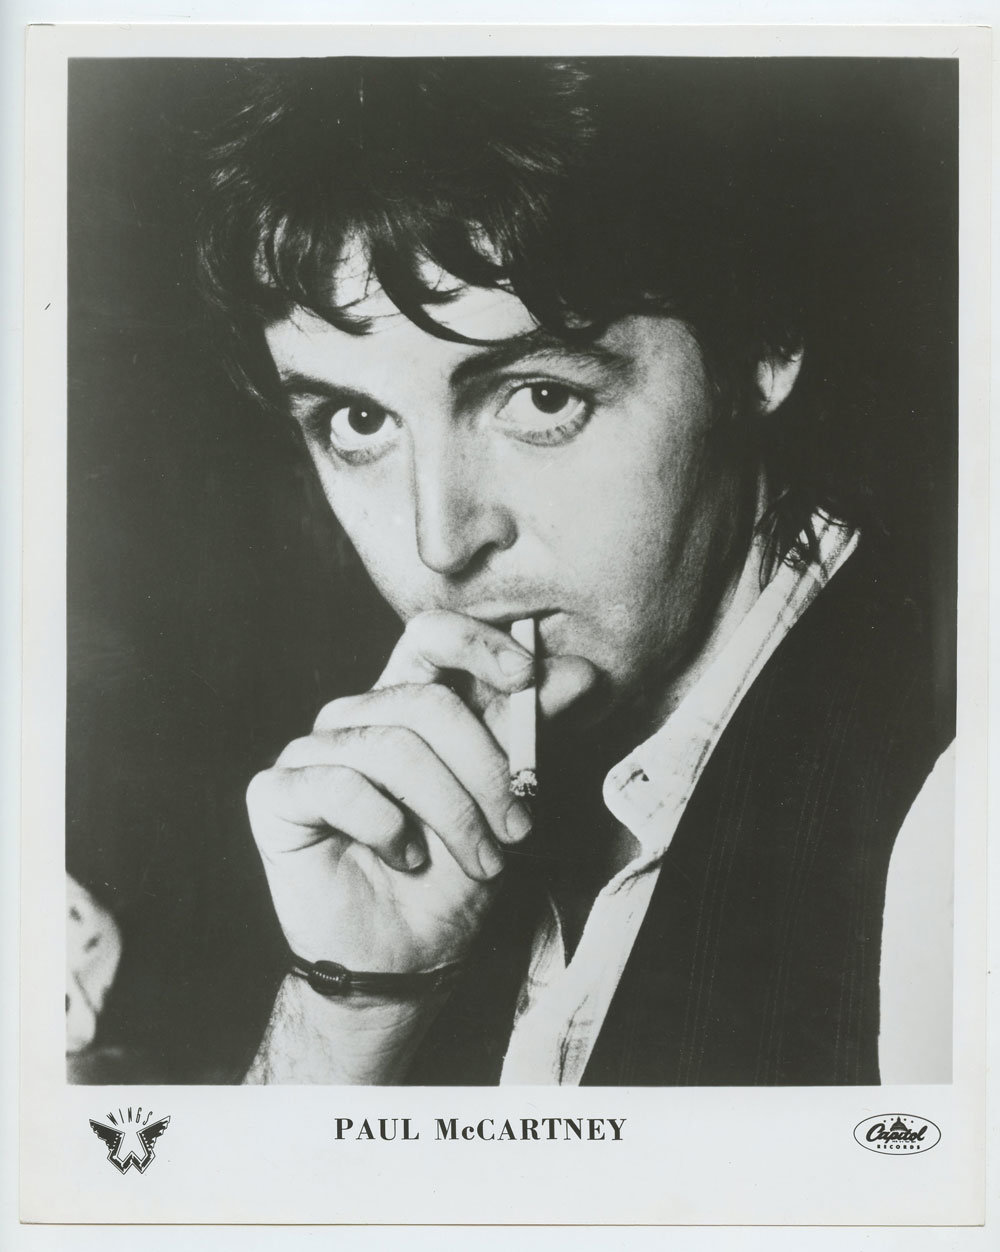 Paul McCartney Photo 1970s Capitol Records